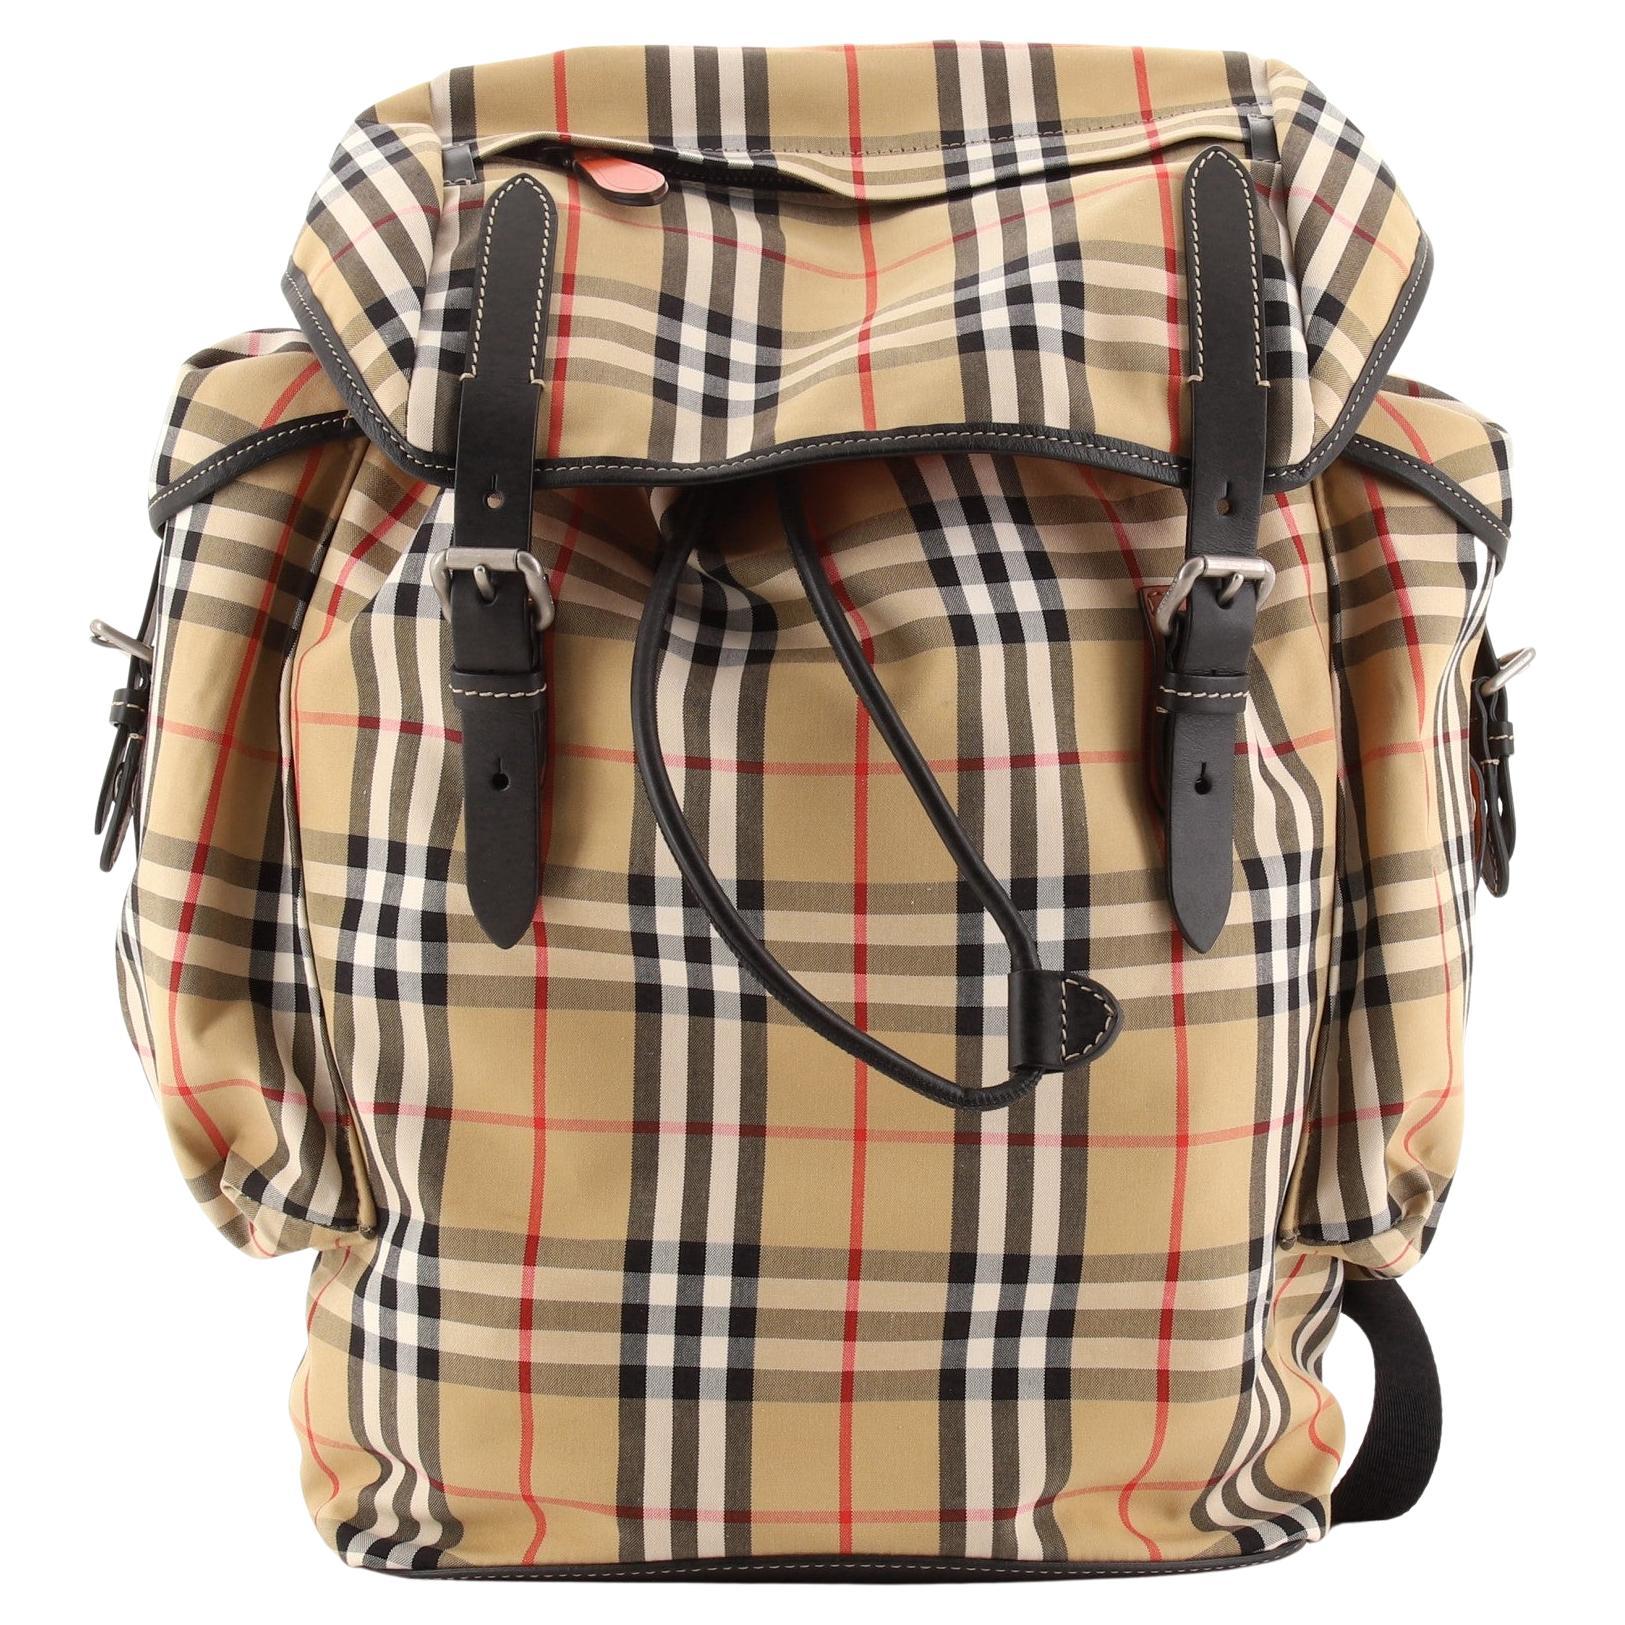 Burberry Rucksack Backpack Vintage Check Nylon Medium